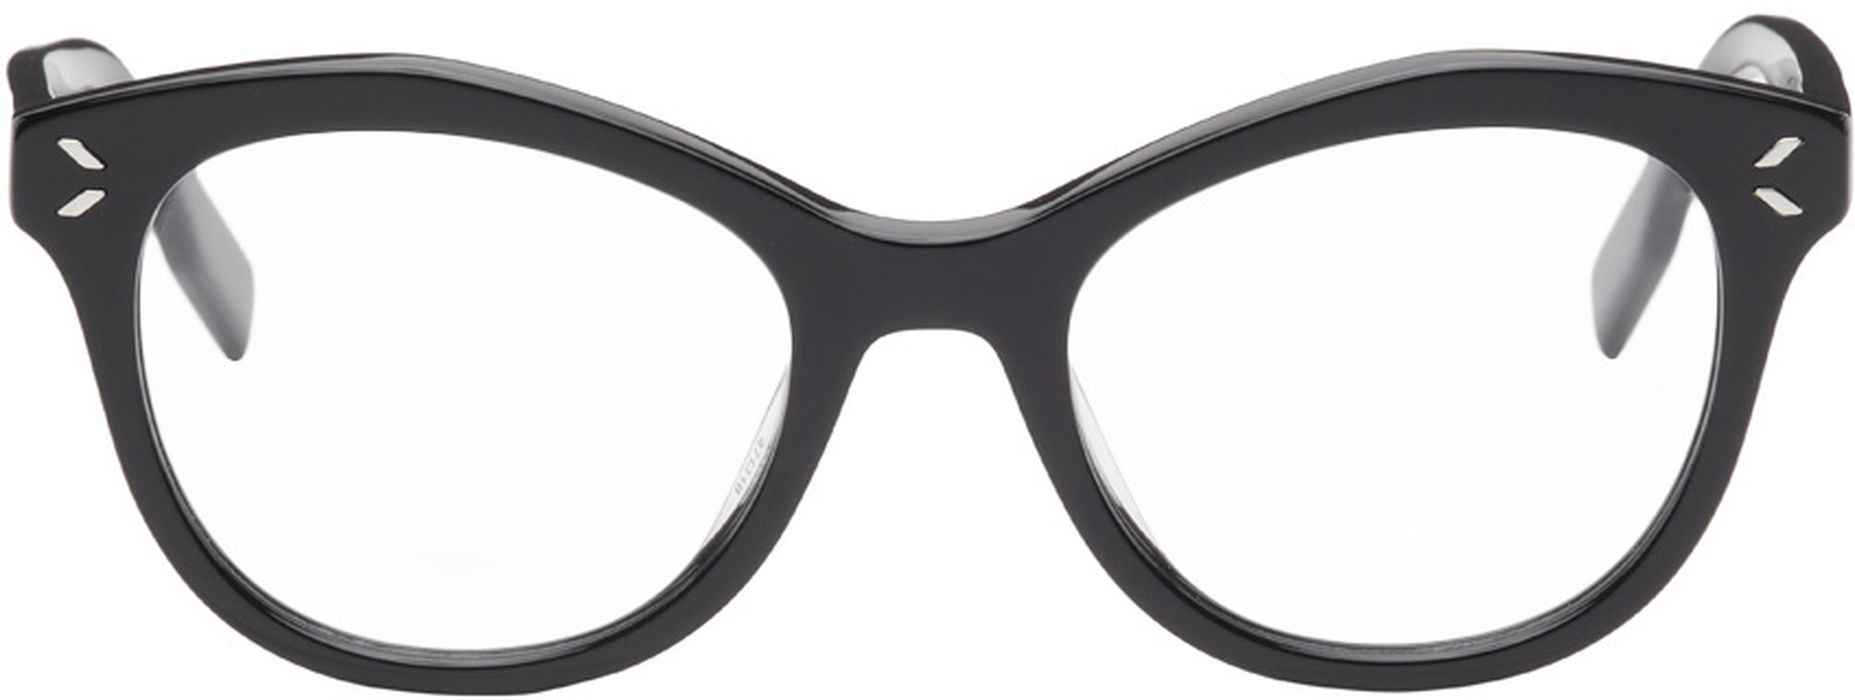 MCQ Black Cat Eye Glasses